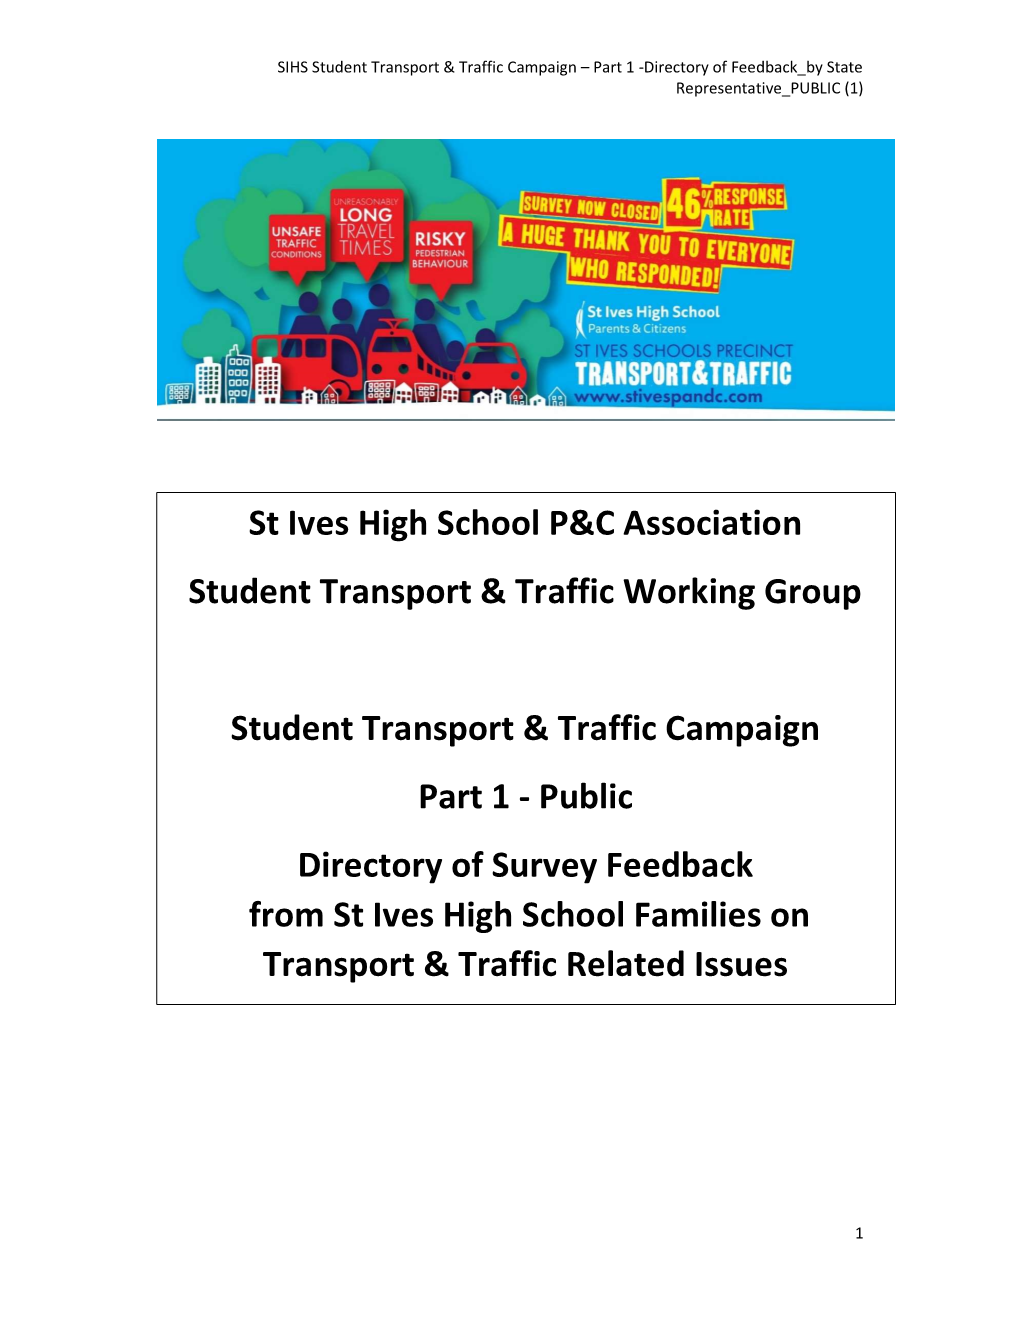 St Ives High School P&C Association Student Transport